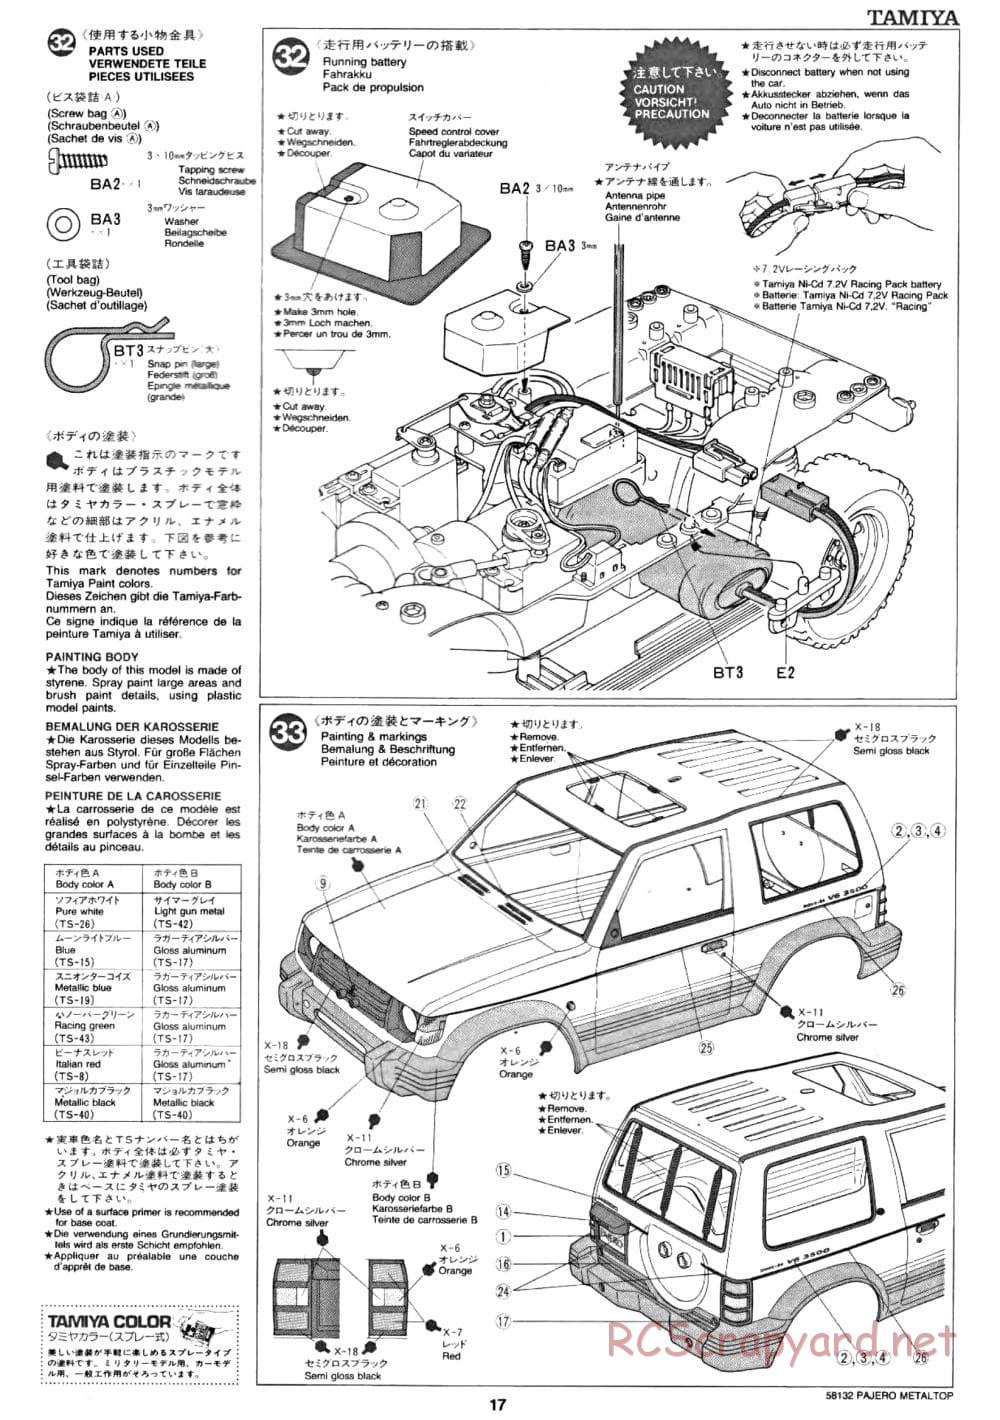 Tamiya - Mitsubishi Pajero Metaltop Wide - CC-01 Chassis - Manual - Page 17